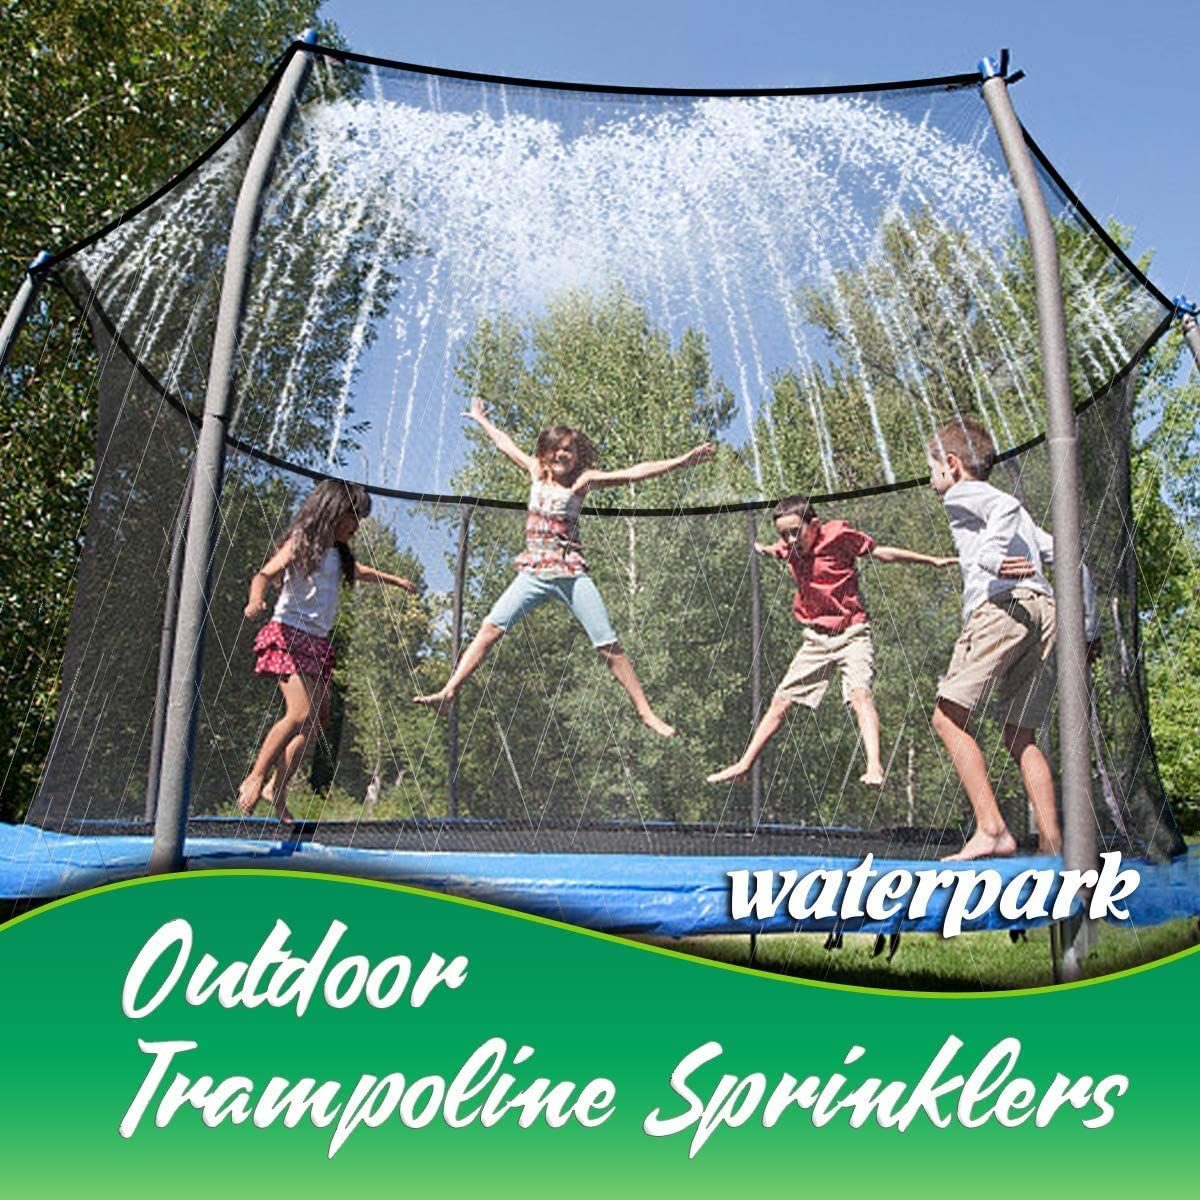 Tesmotor Trampoline Sprinkler, Outdoor Water Park Sprinkler for Kids - Top Toys and Gifts for Ten Year Old Boys 2